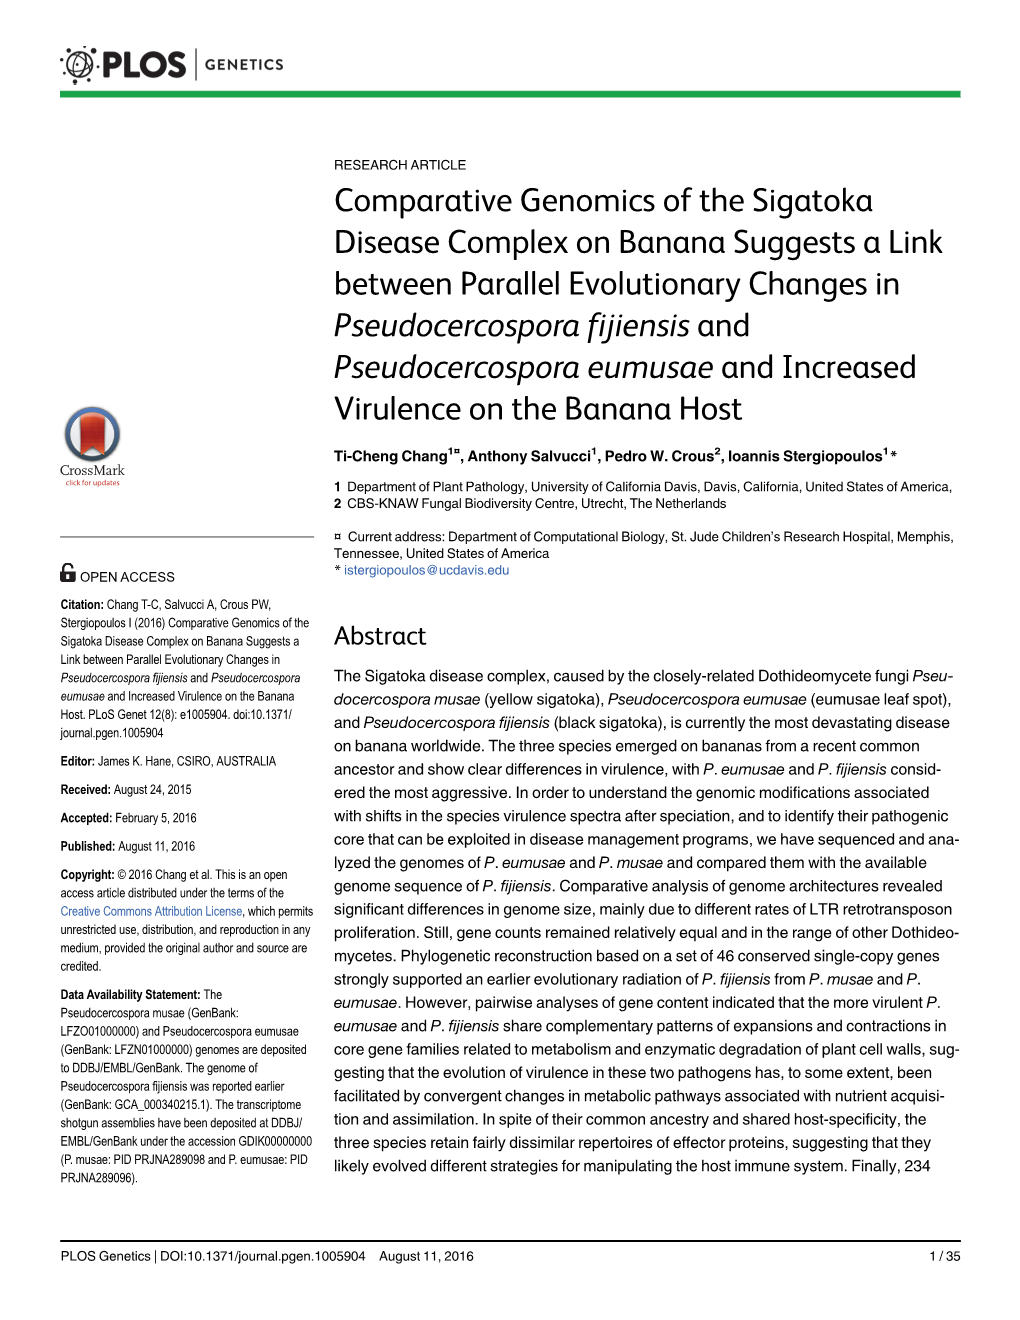 Comparative Genomics of the Sigatoka Disease